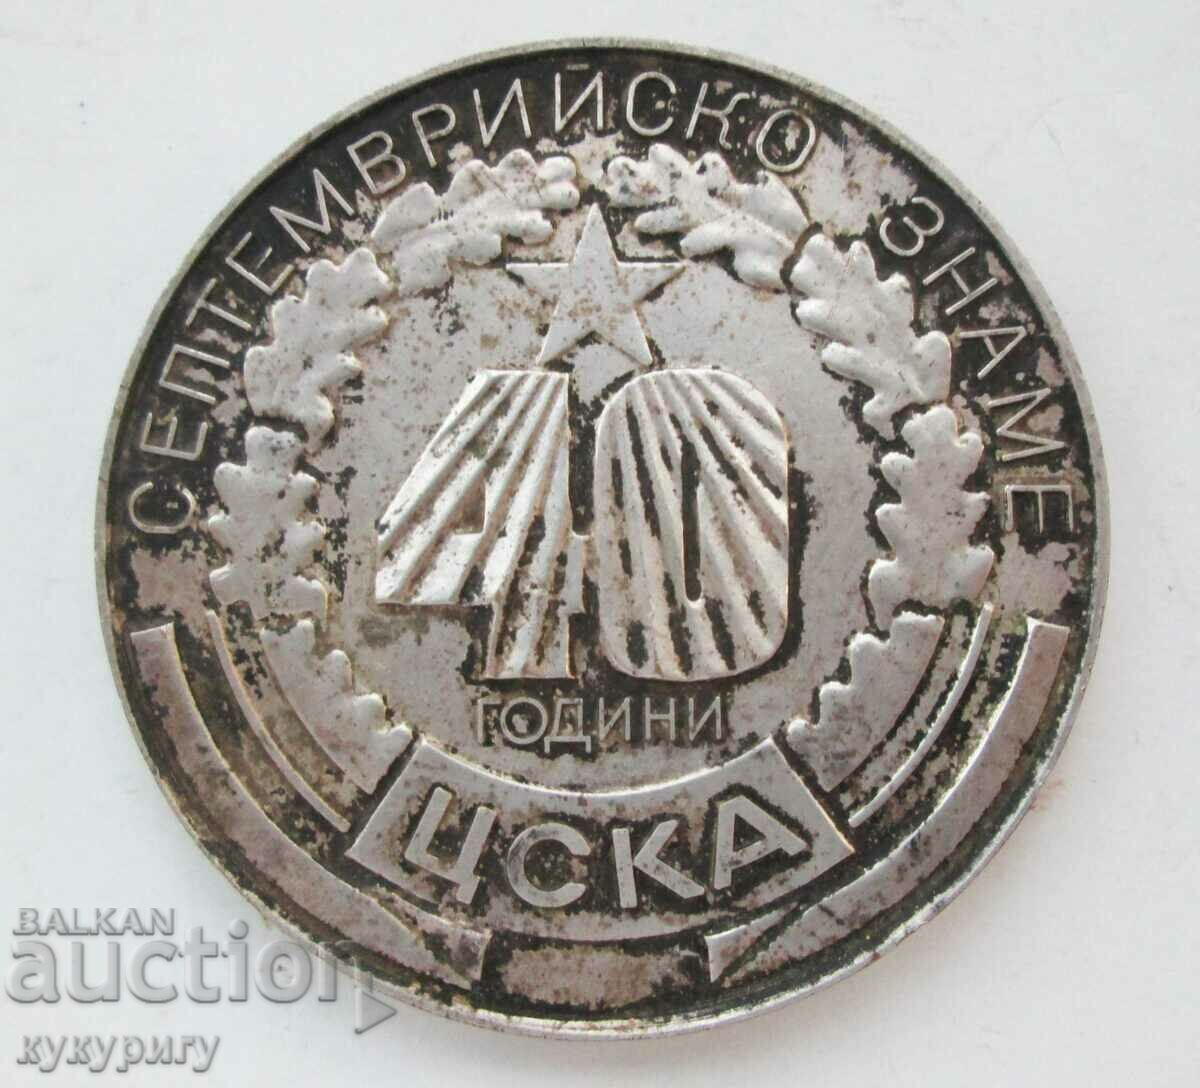 Стар медал плакет почетен знак 40 г ЦСКА Септемврийско знаме